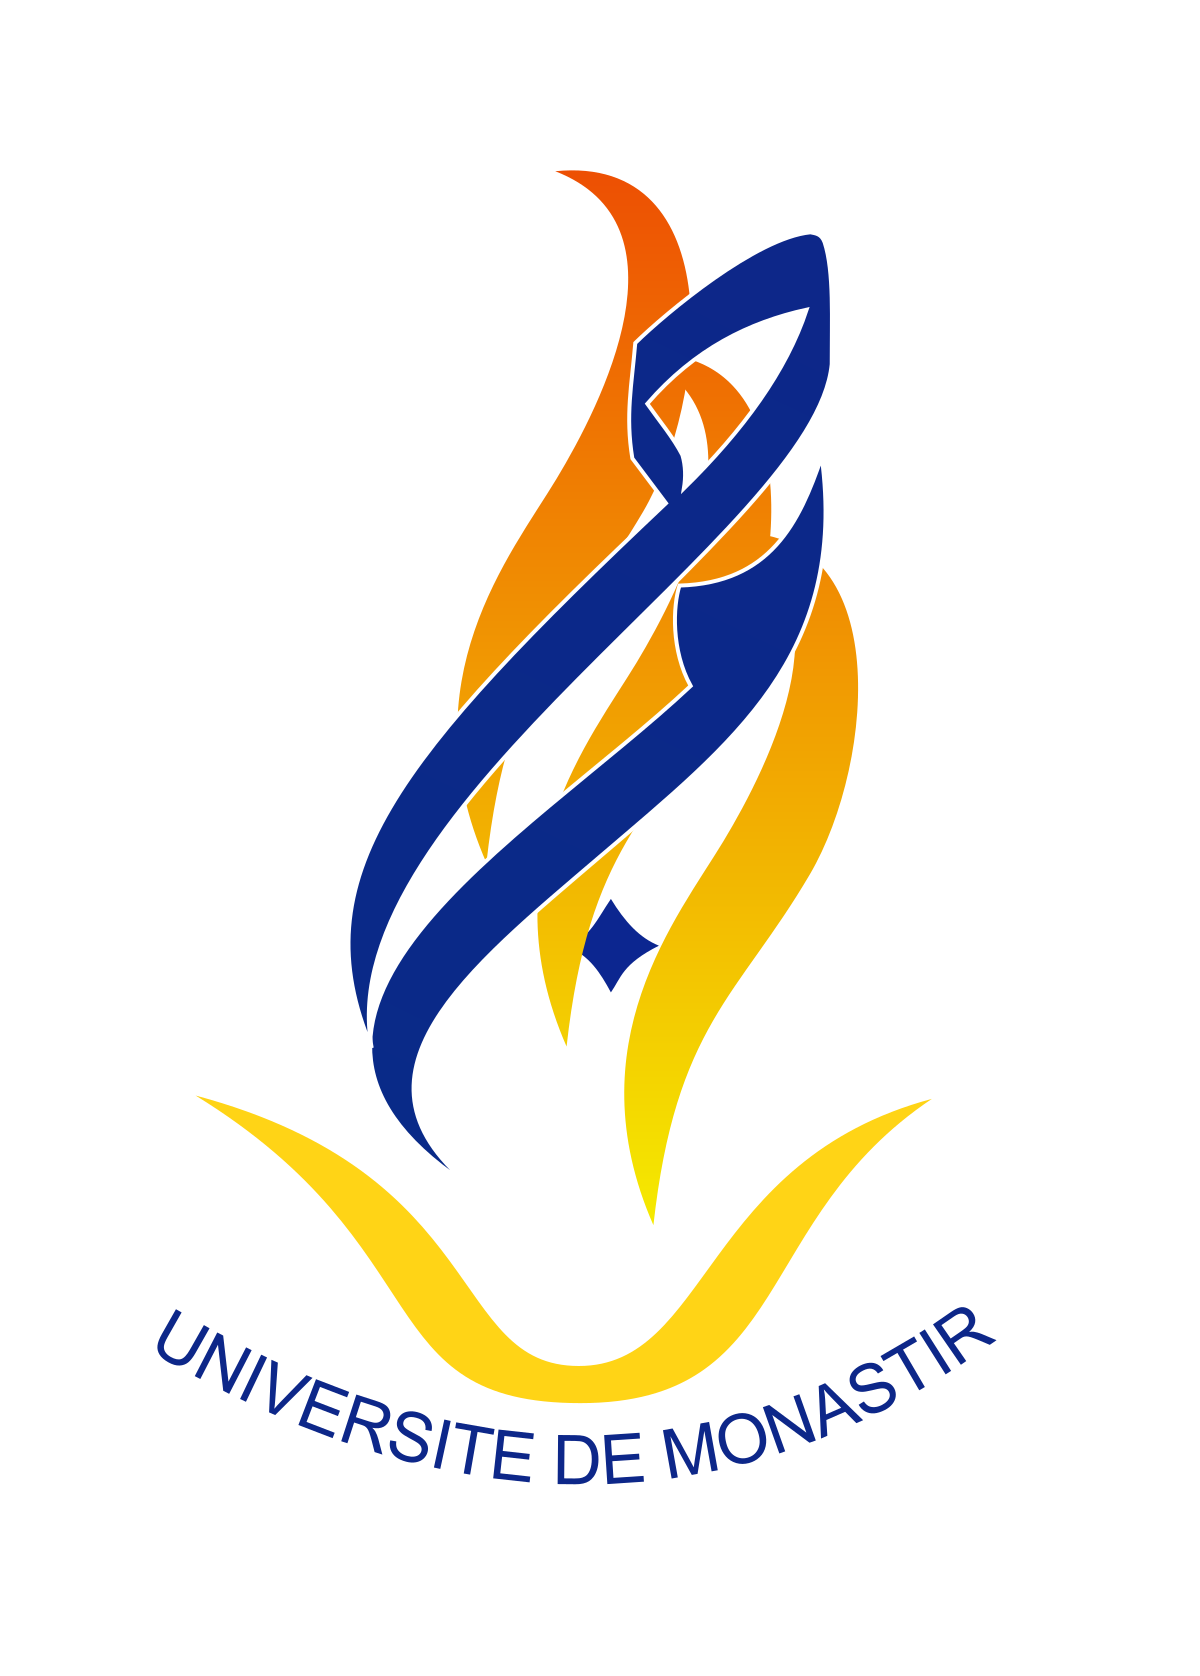 logo_universite